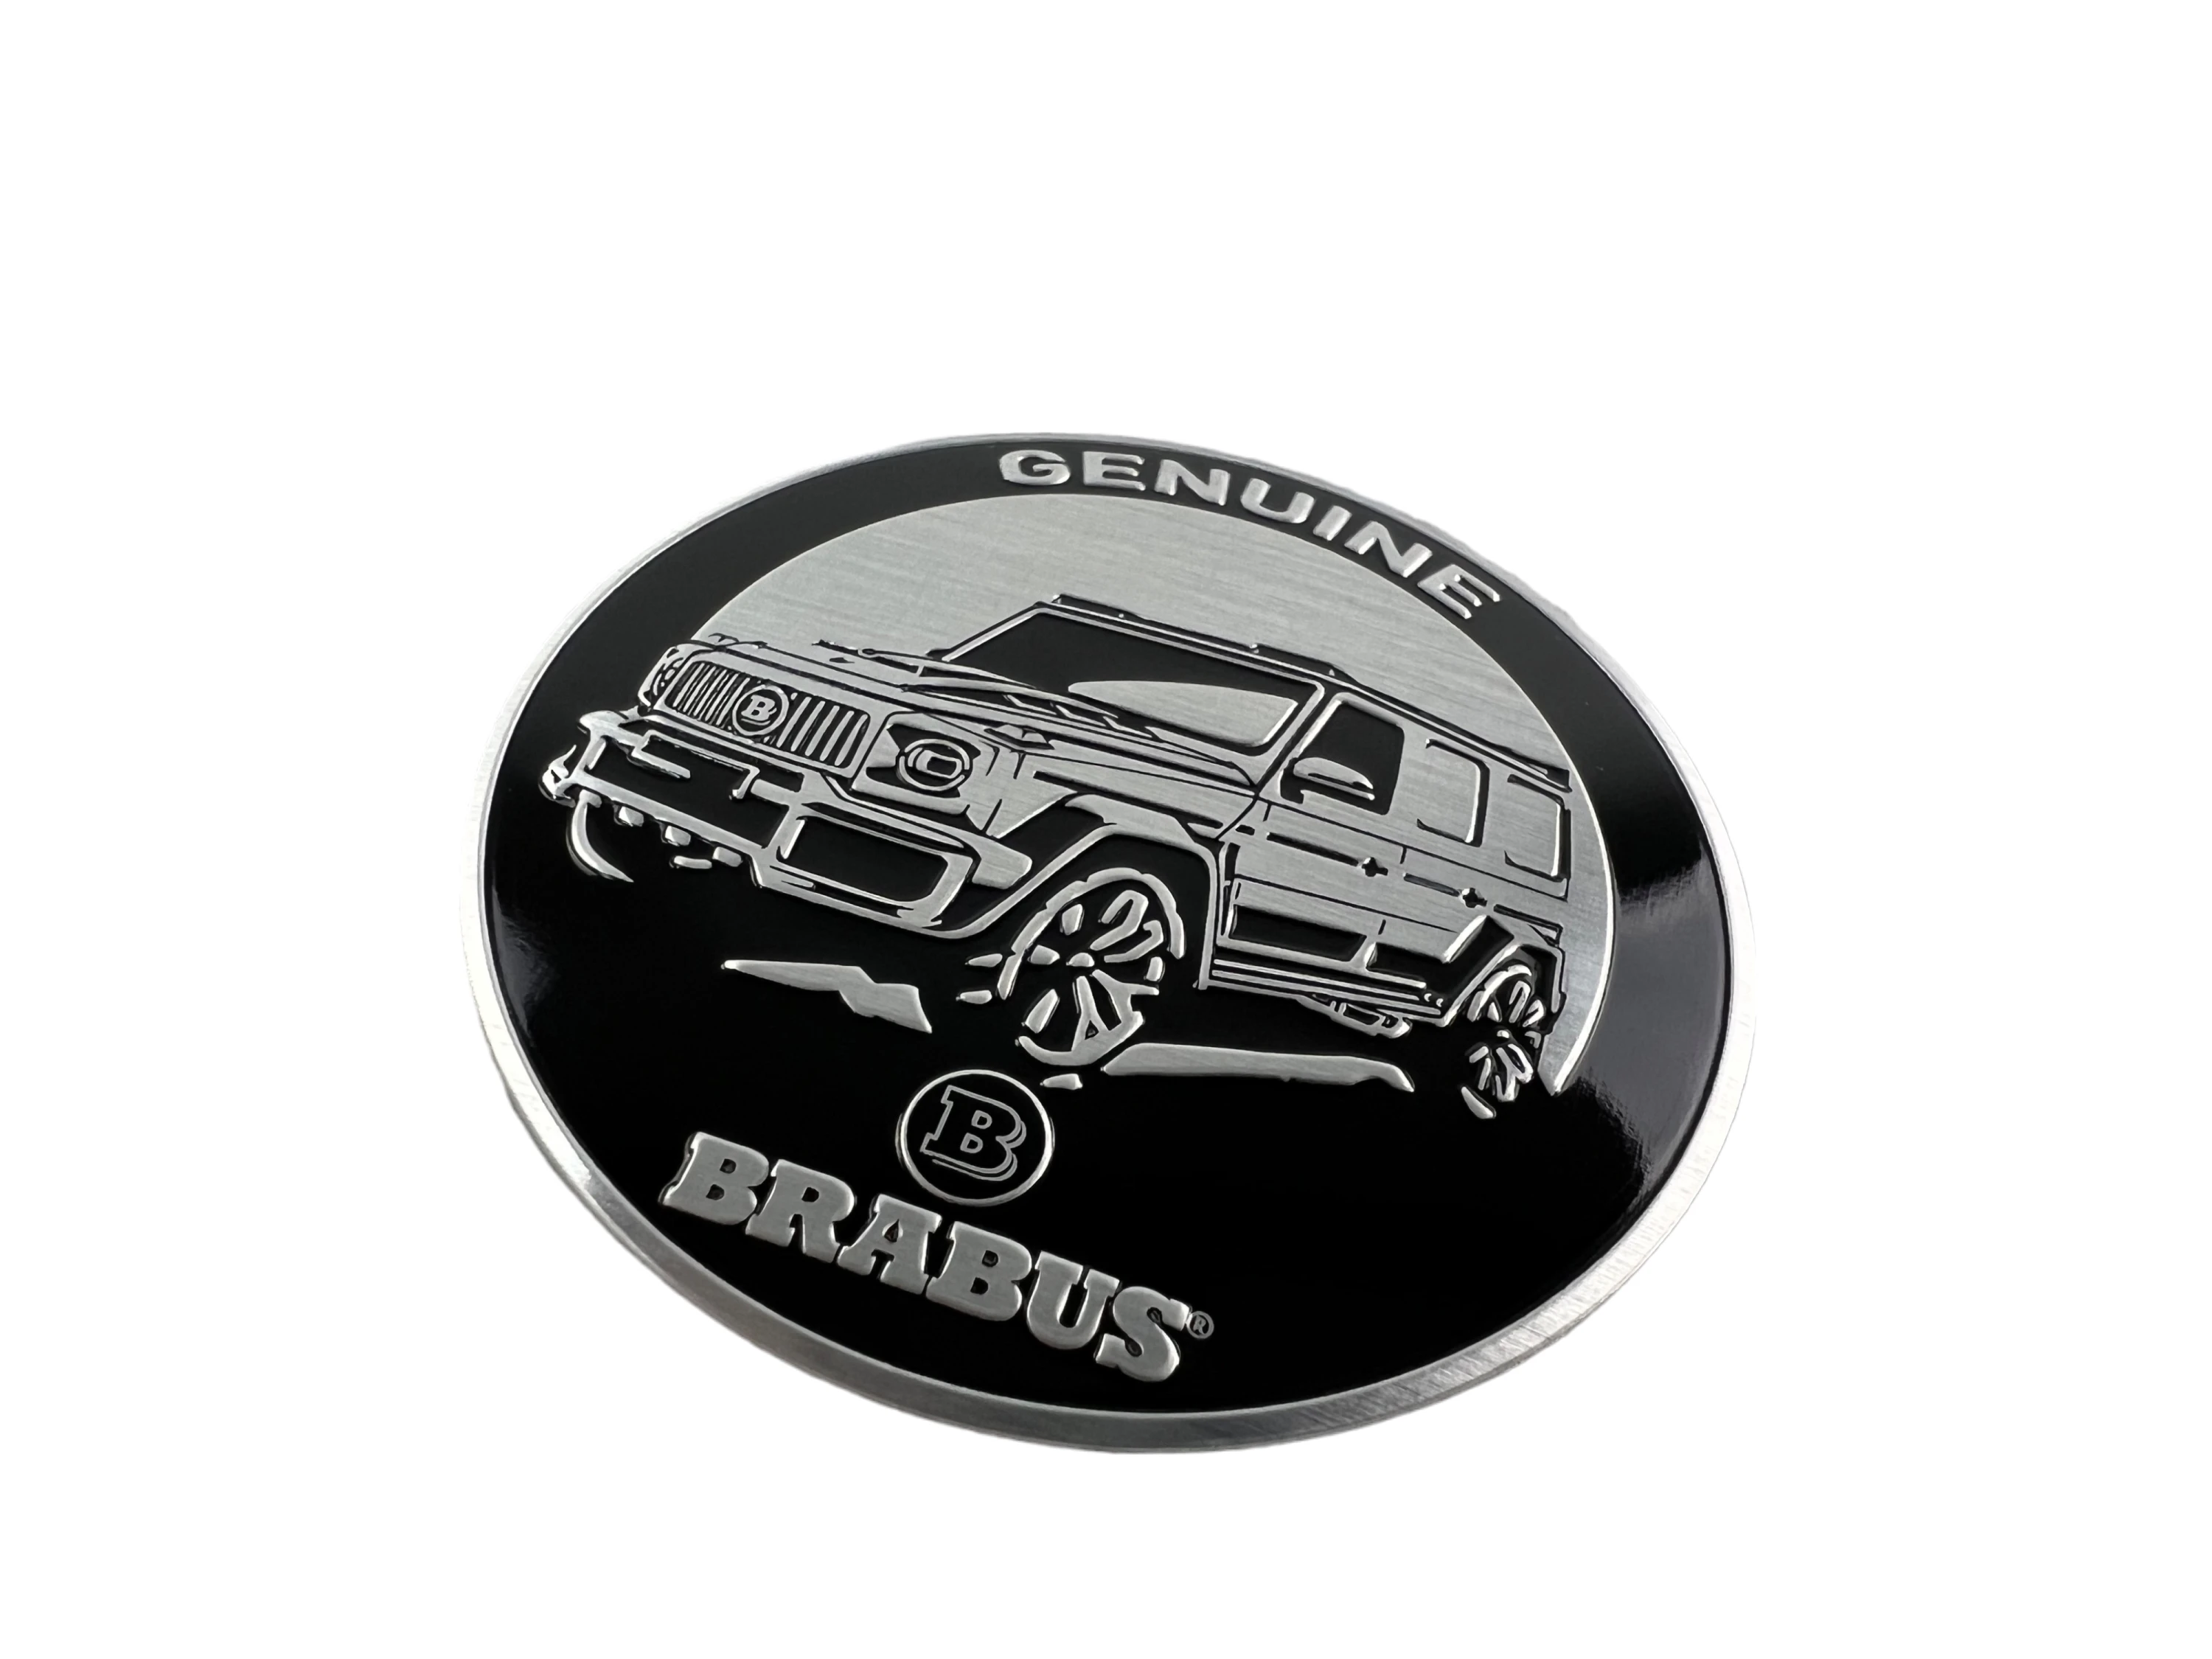 Brabus Emblem Shield Badge Silicone Sticker All SIZES Car Interior, Phone,  Laptop, Refrigerator, Suitcase, Glass, Mirror, Door, iPad 